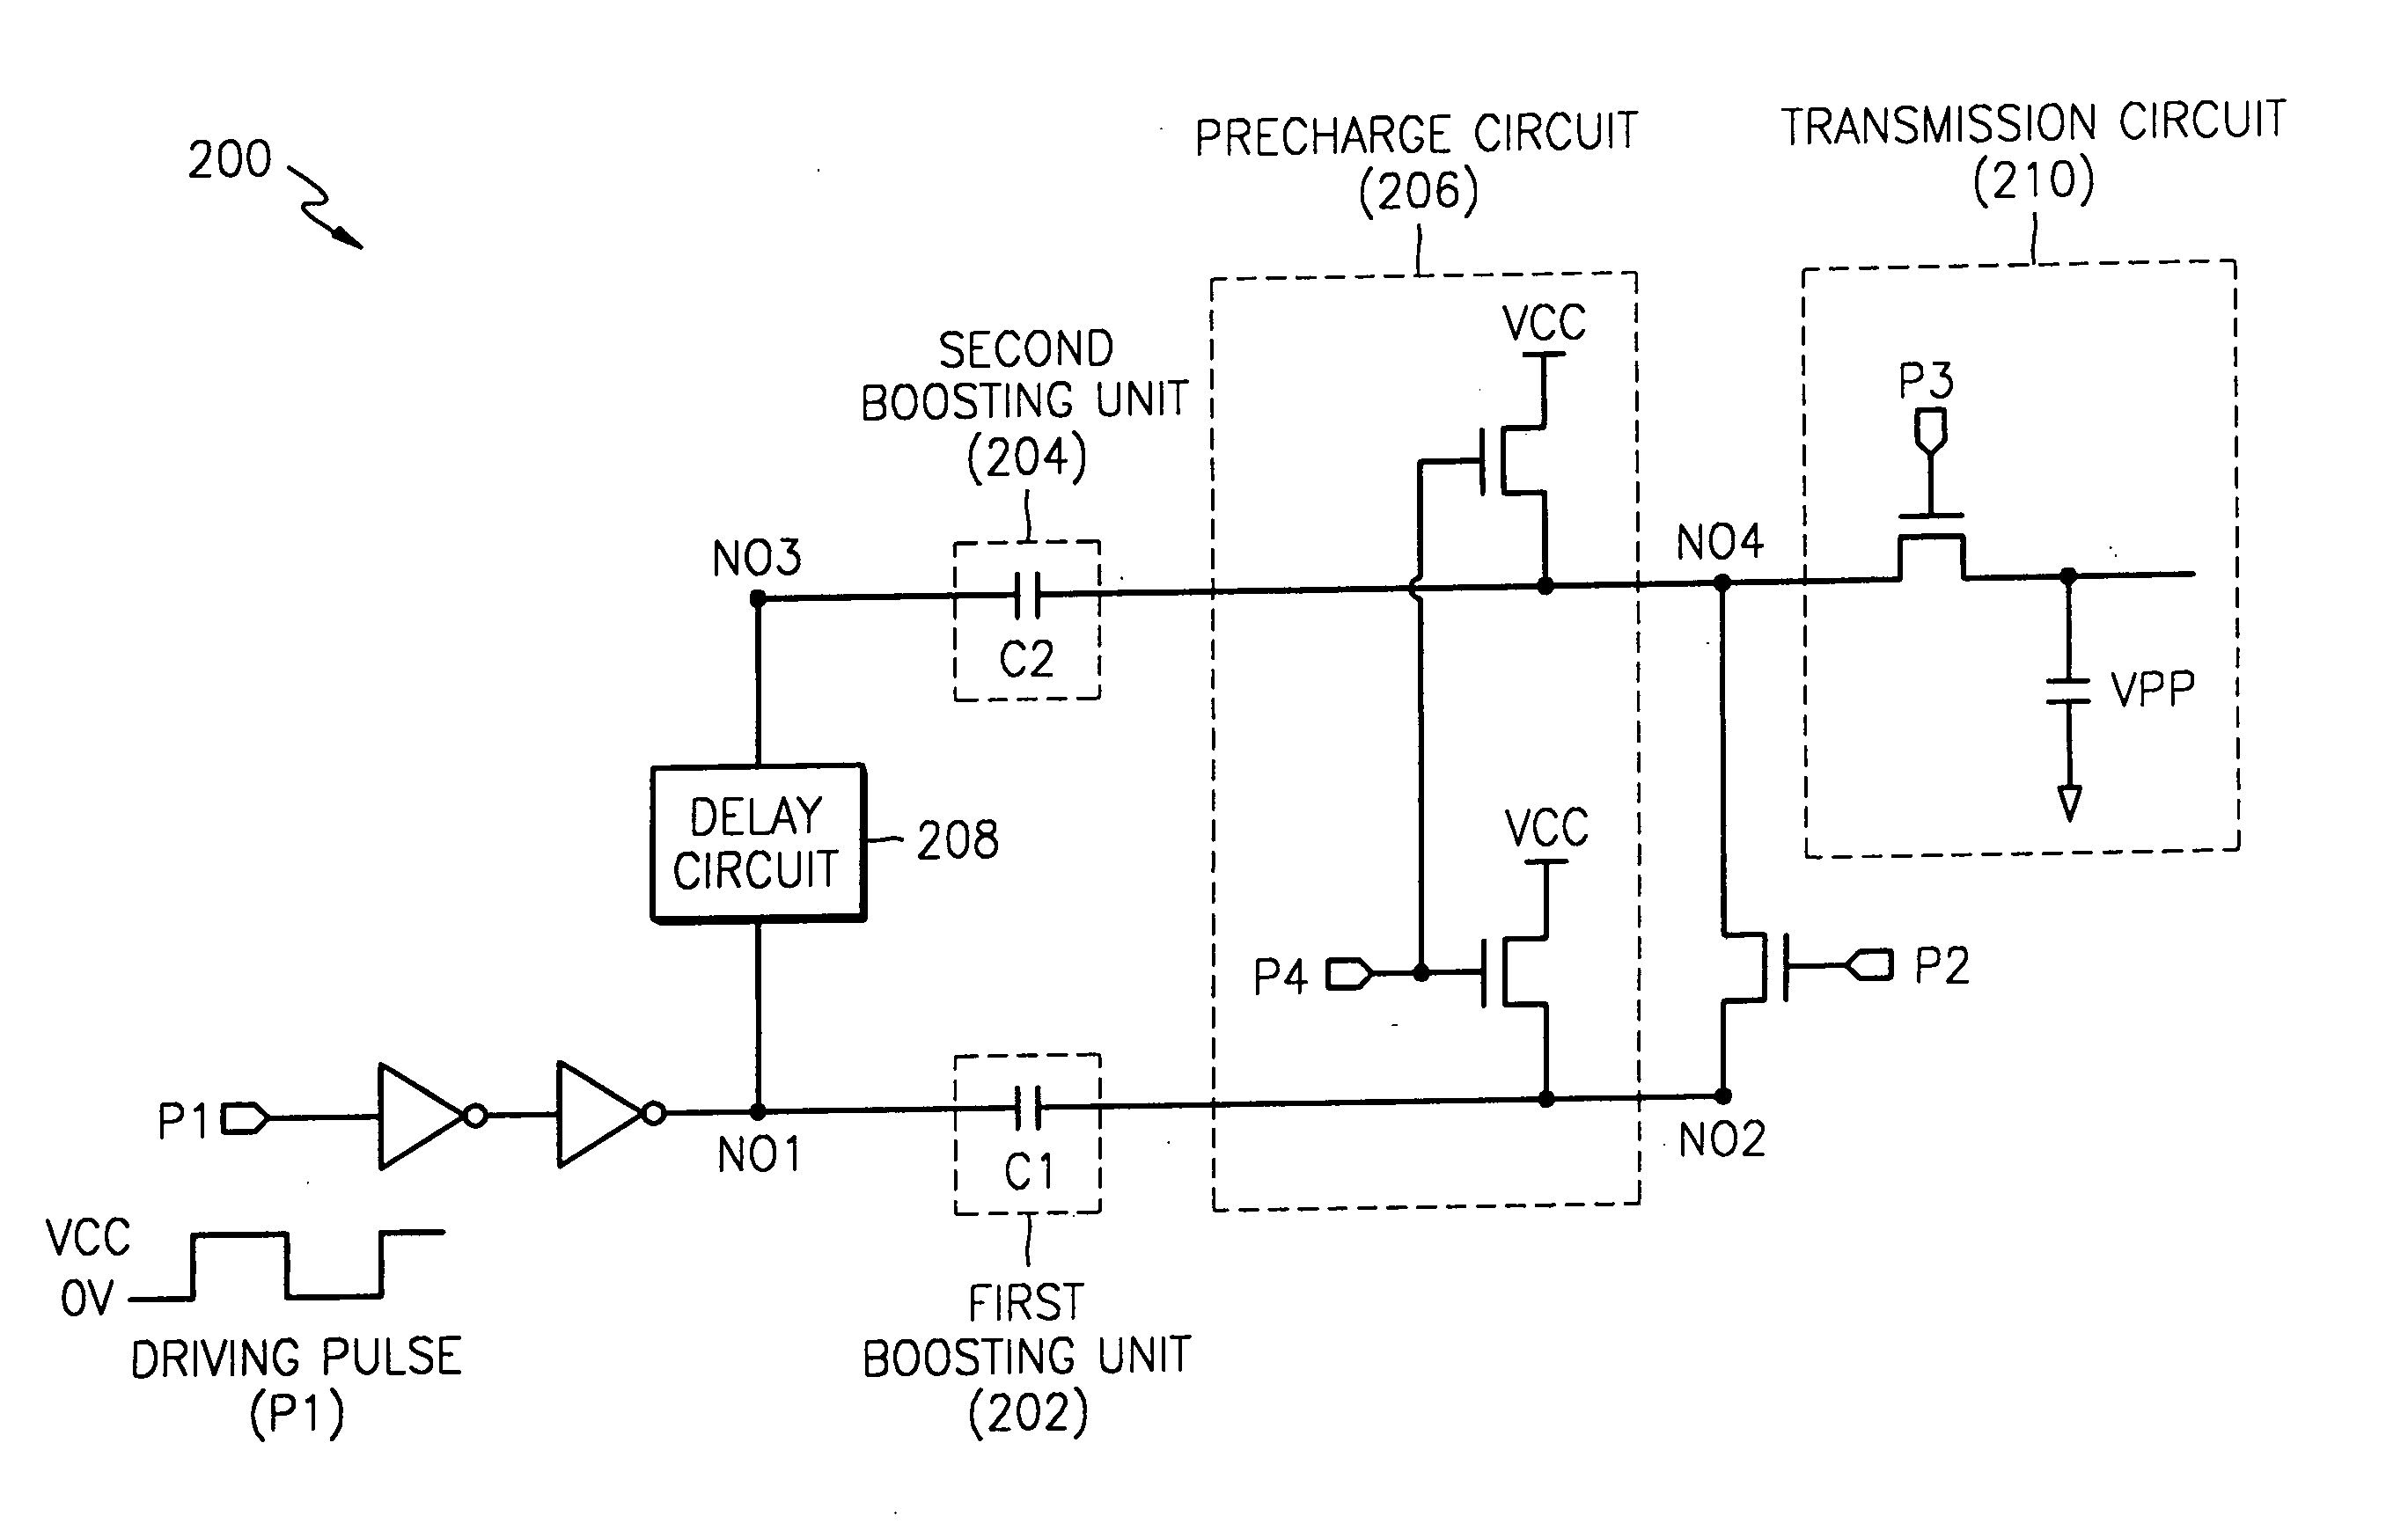 High voltage generator having separate voltage supply circuit